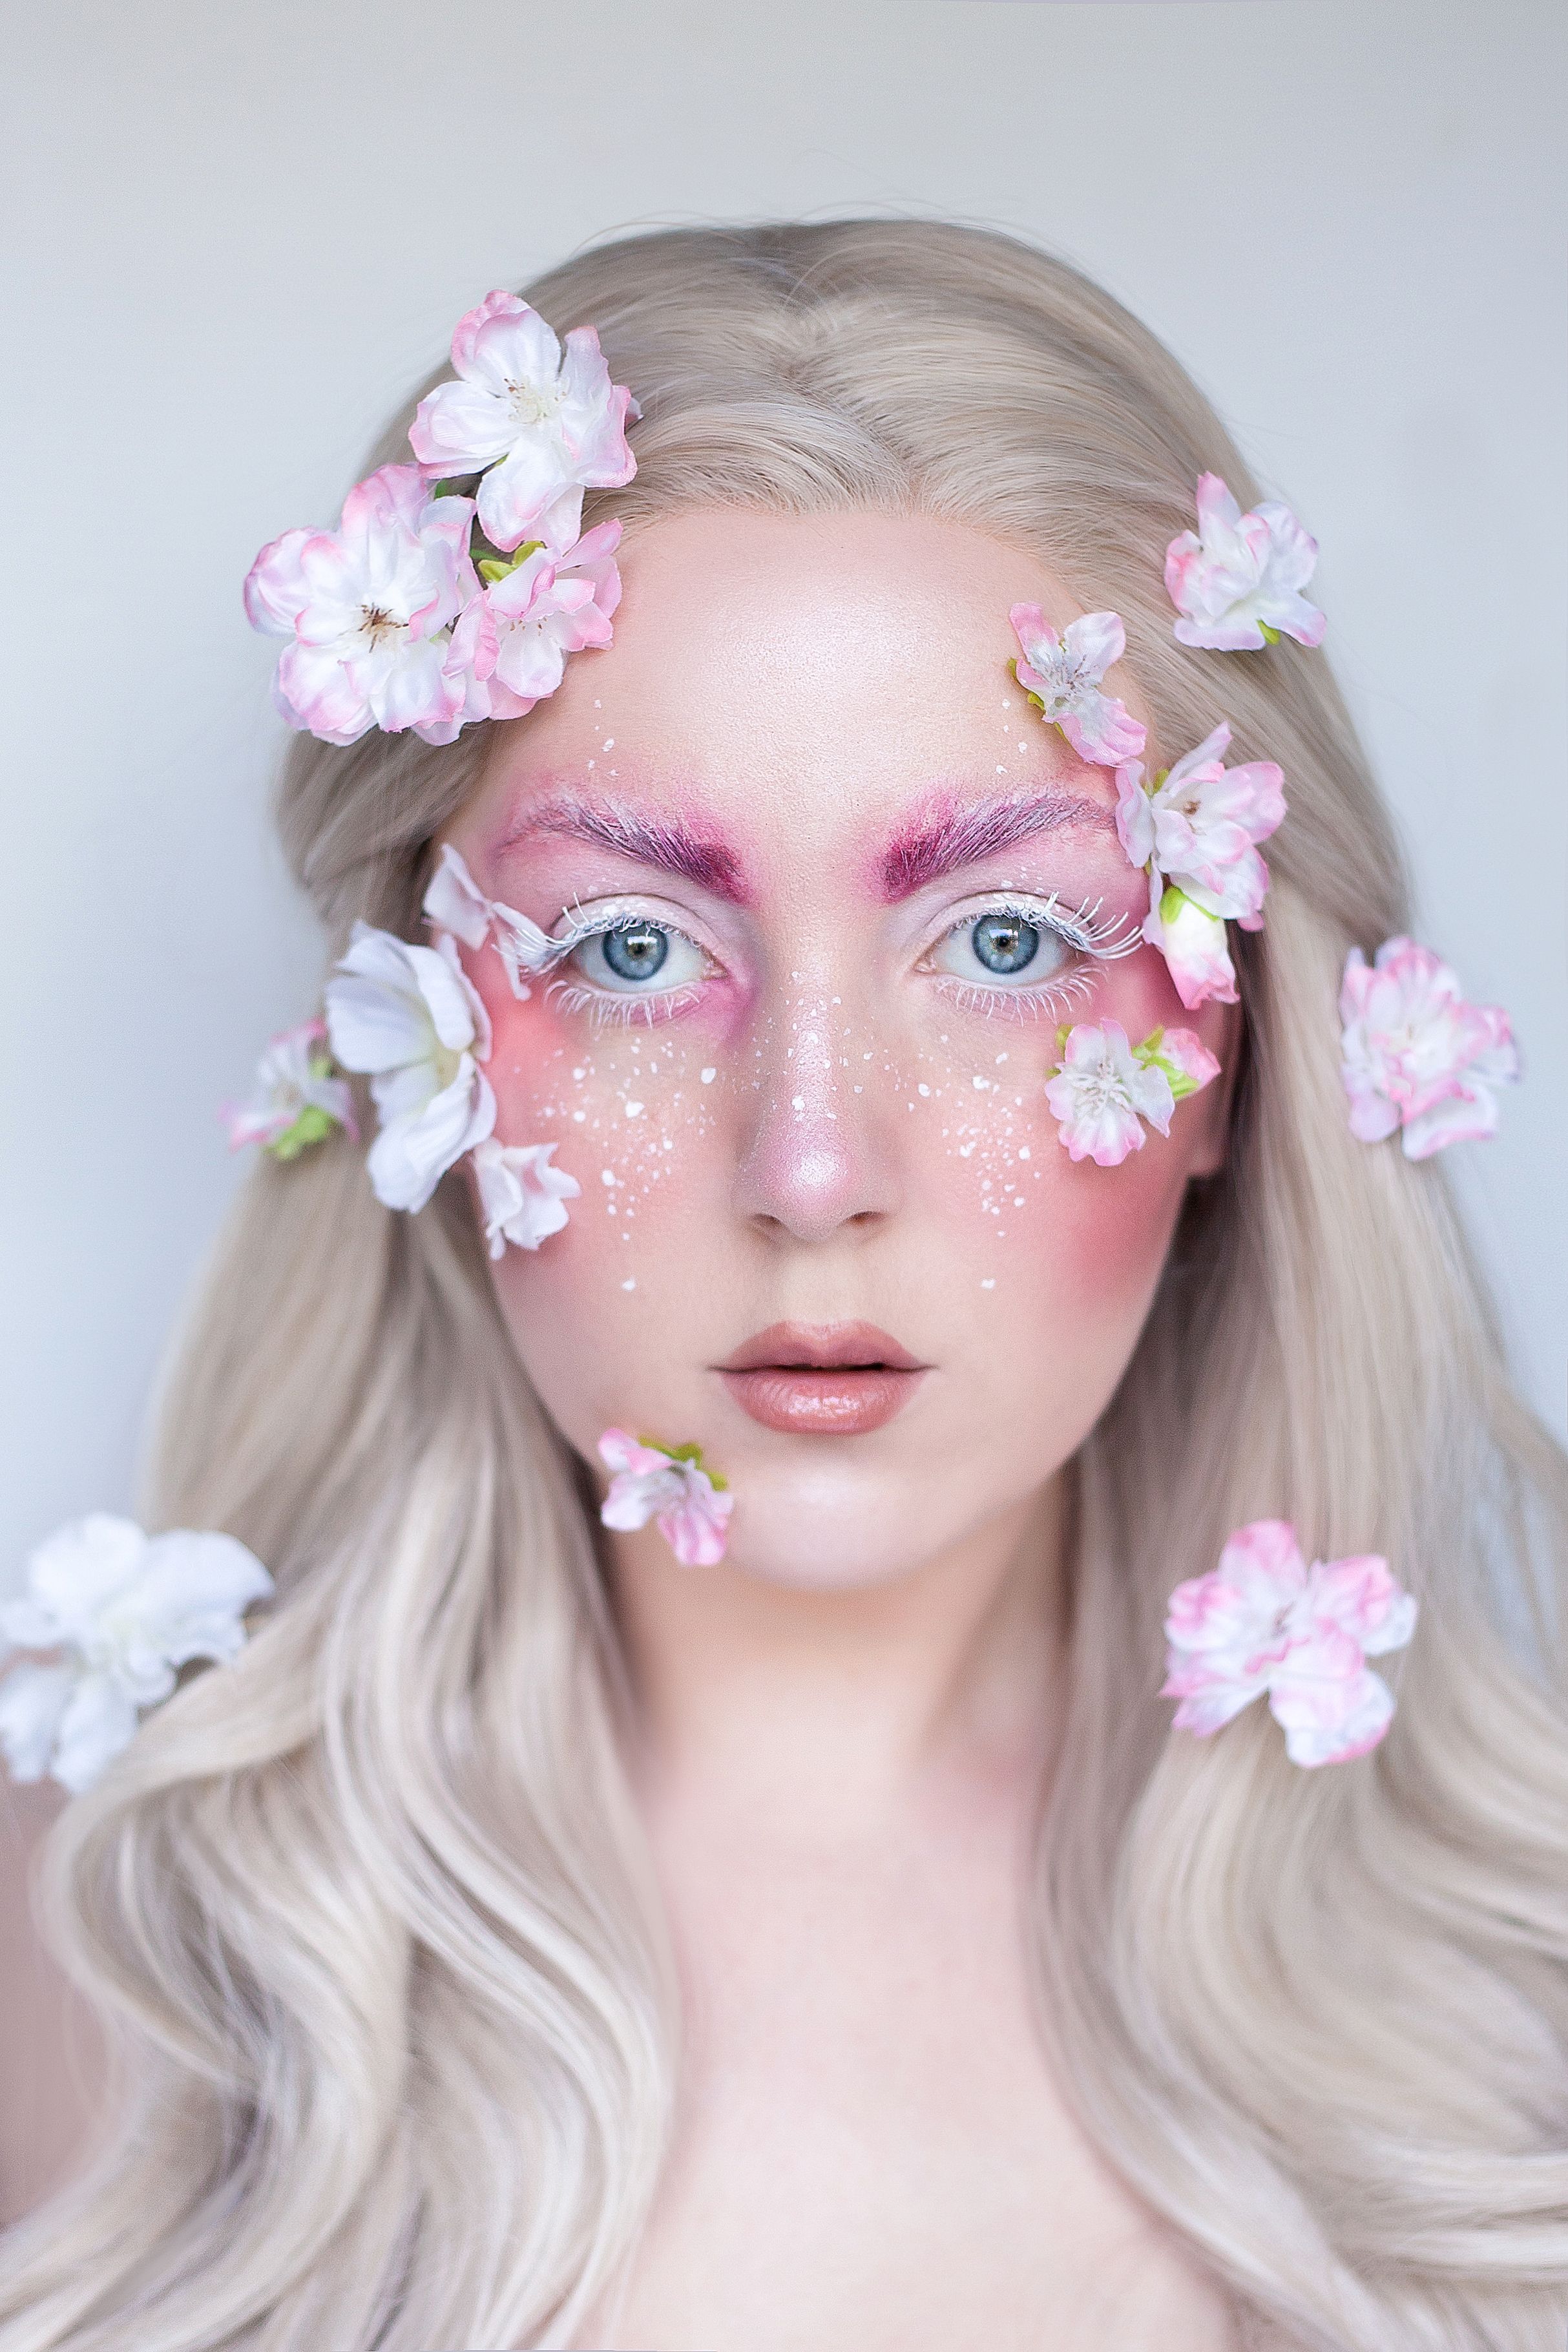 4 makeup Pink halloween ideas